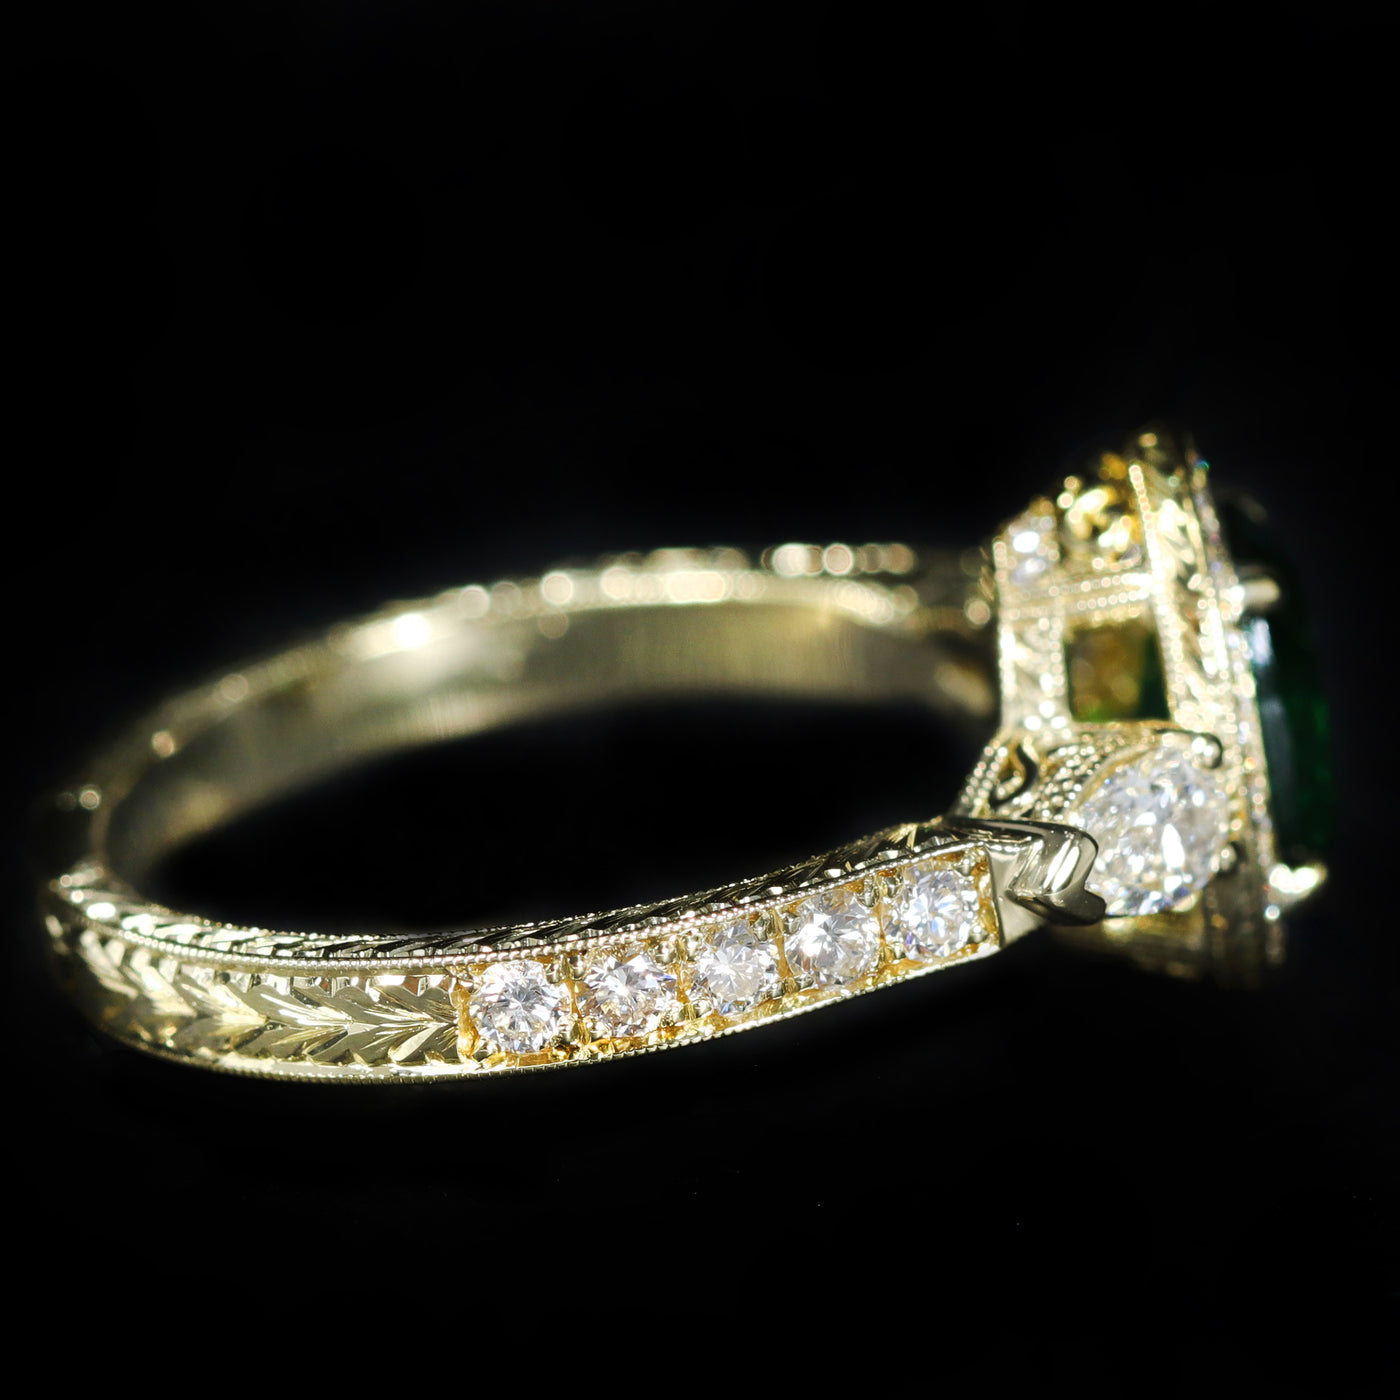 18k Yellow Gold 1.78 Carat Tsavorite Garnet and Diamond Ring